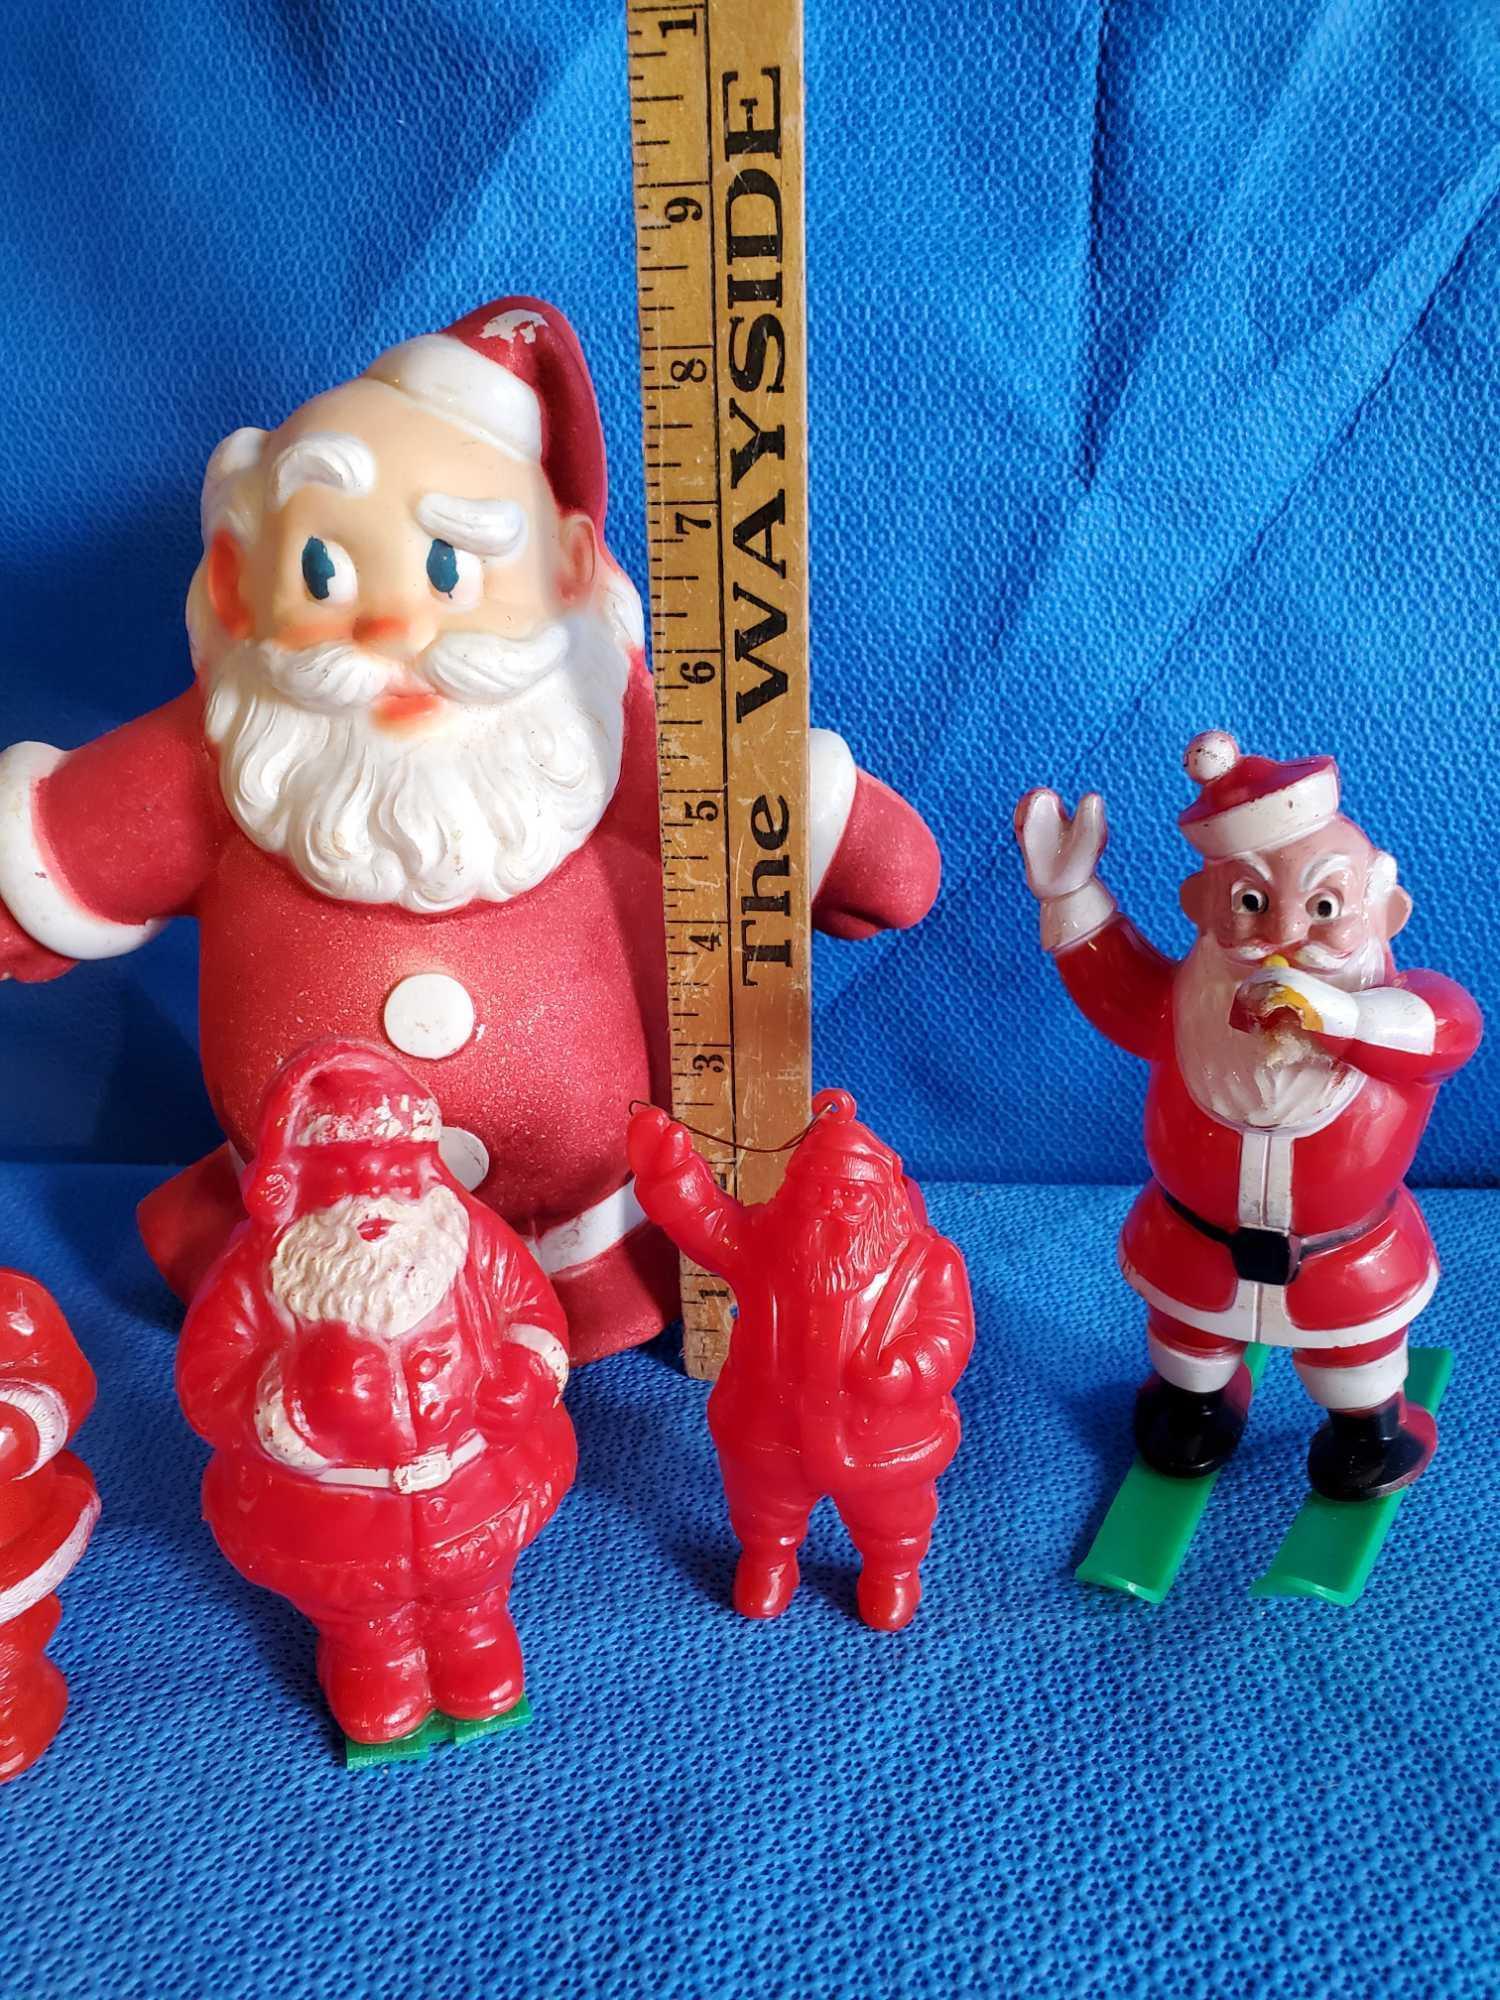 Very Vintage Santa ornaments and parts, plastic